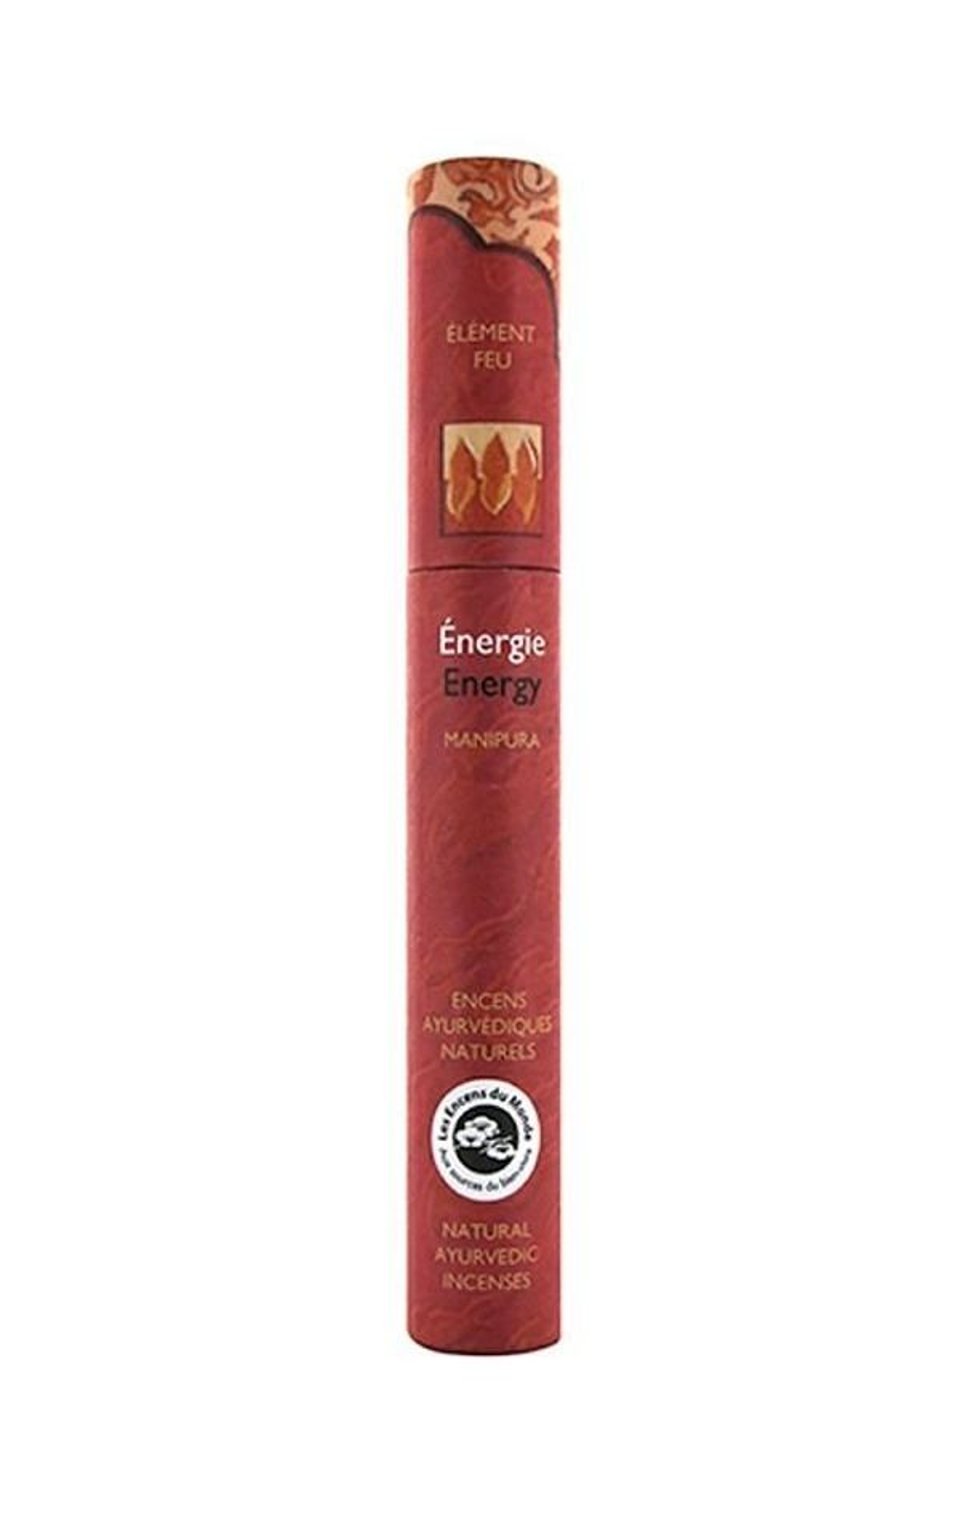 Incense Ayurvedic - Energy